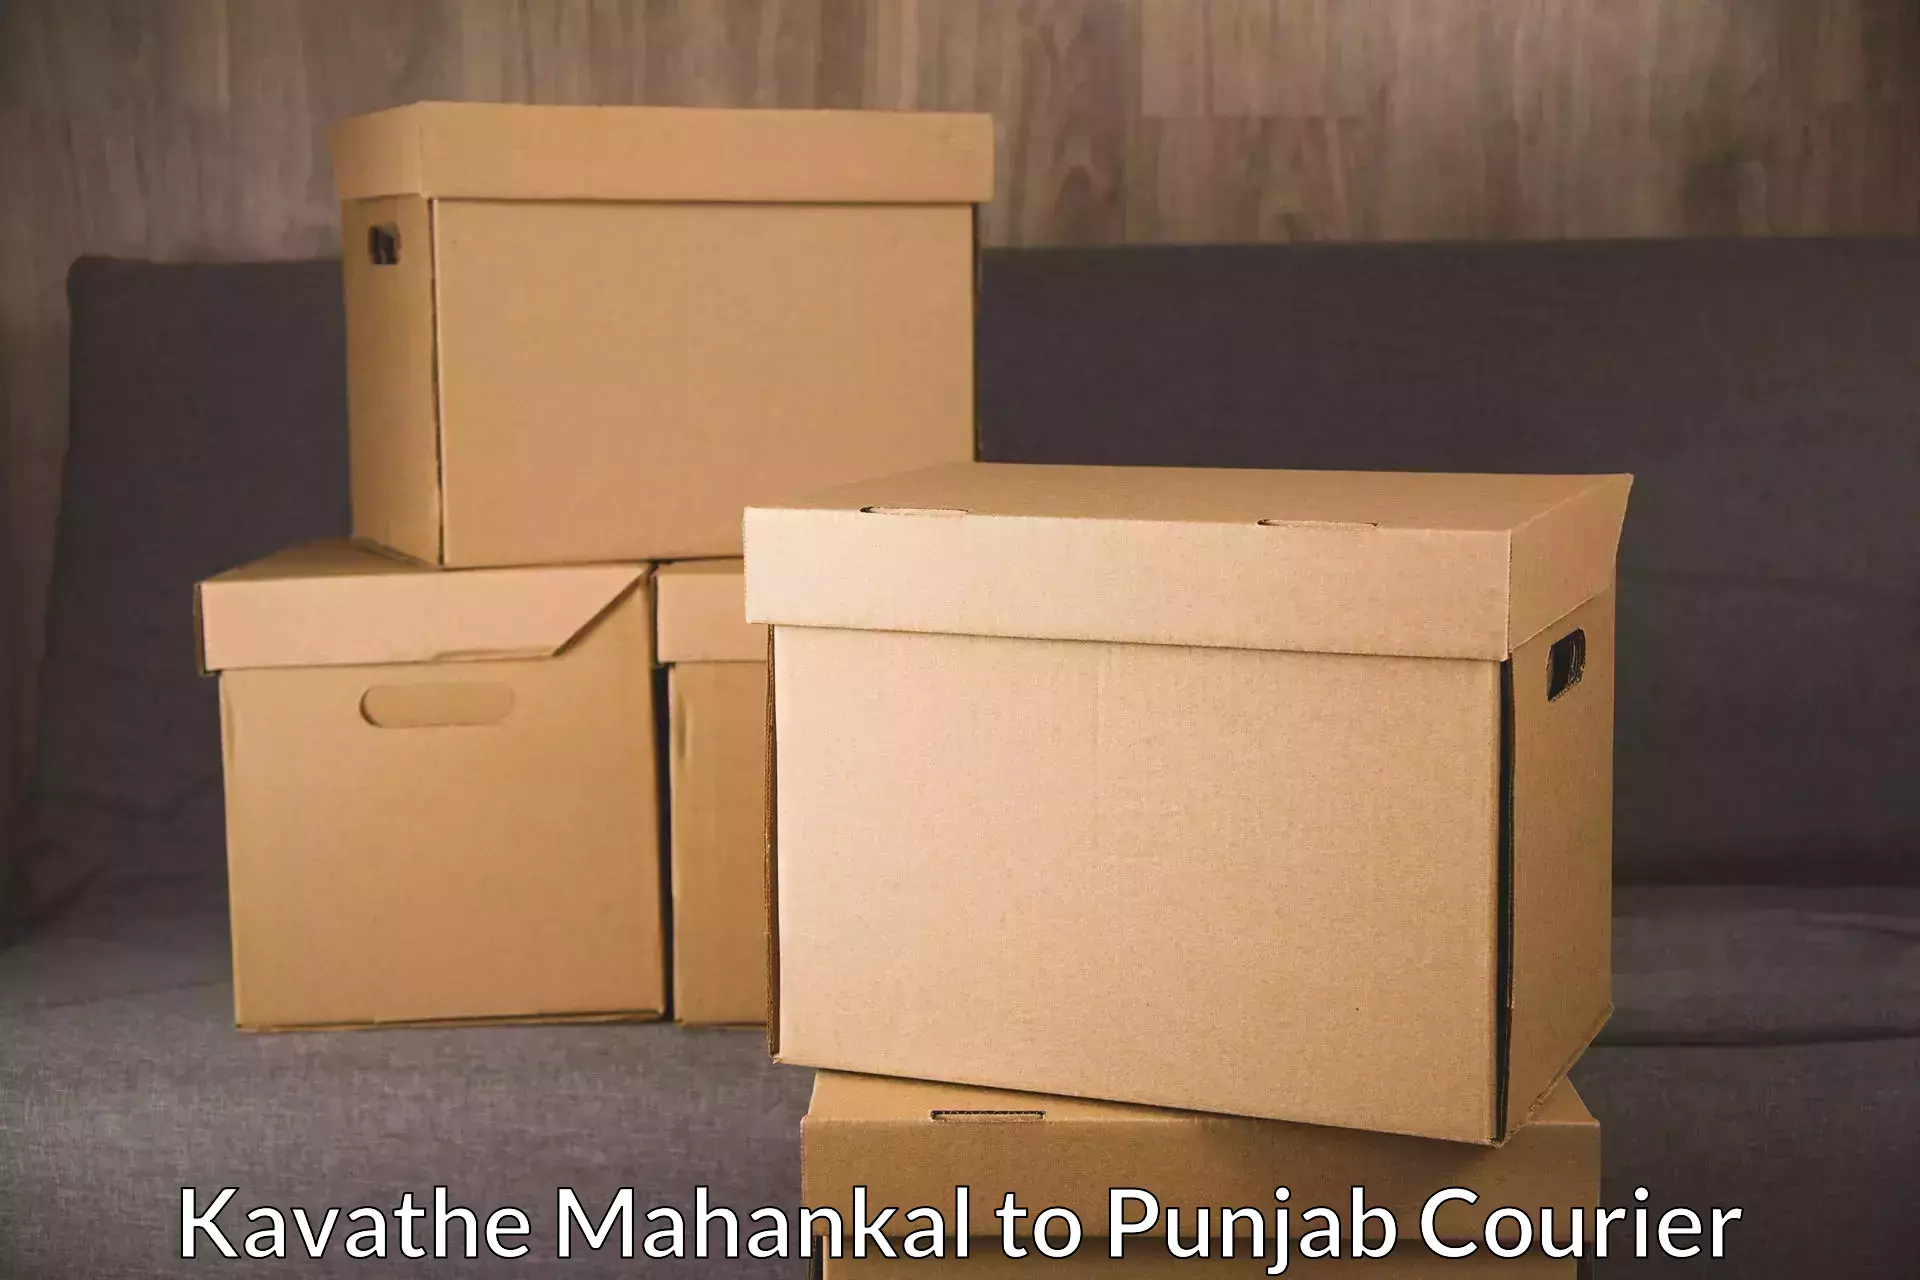 Efficient order fulfillment in Kavathe Mahankal to Punjab